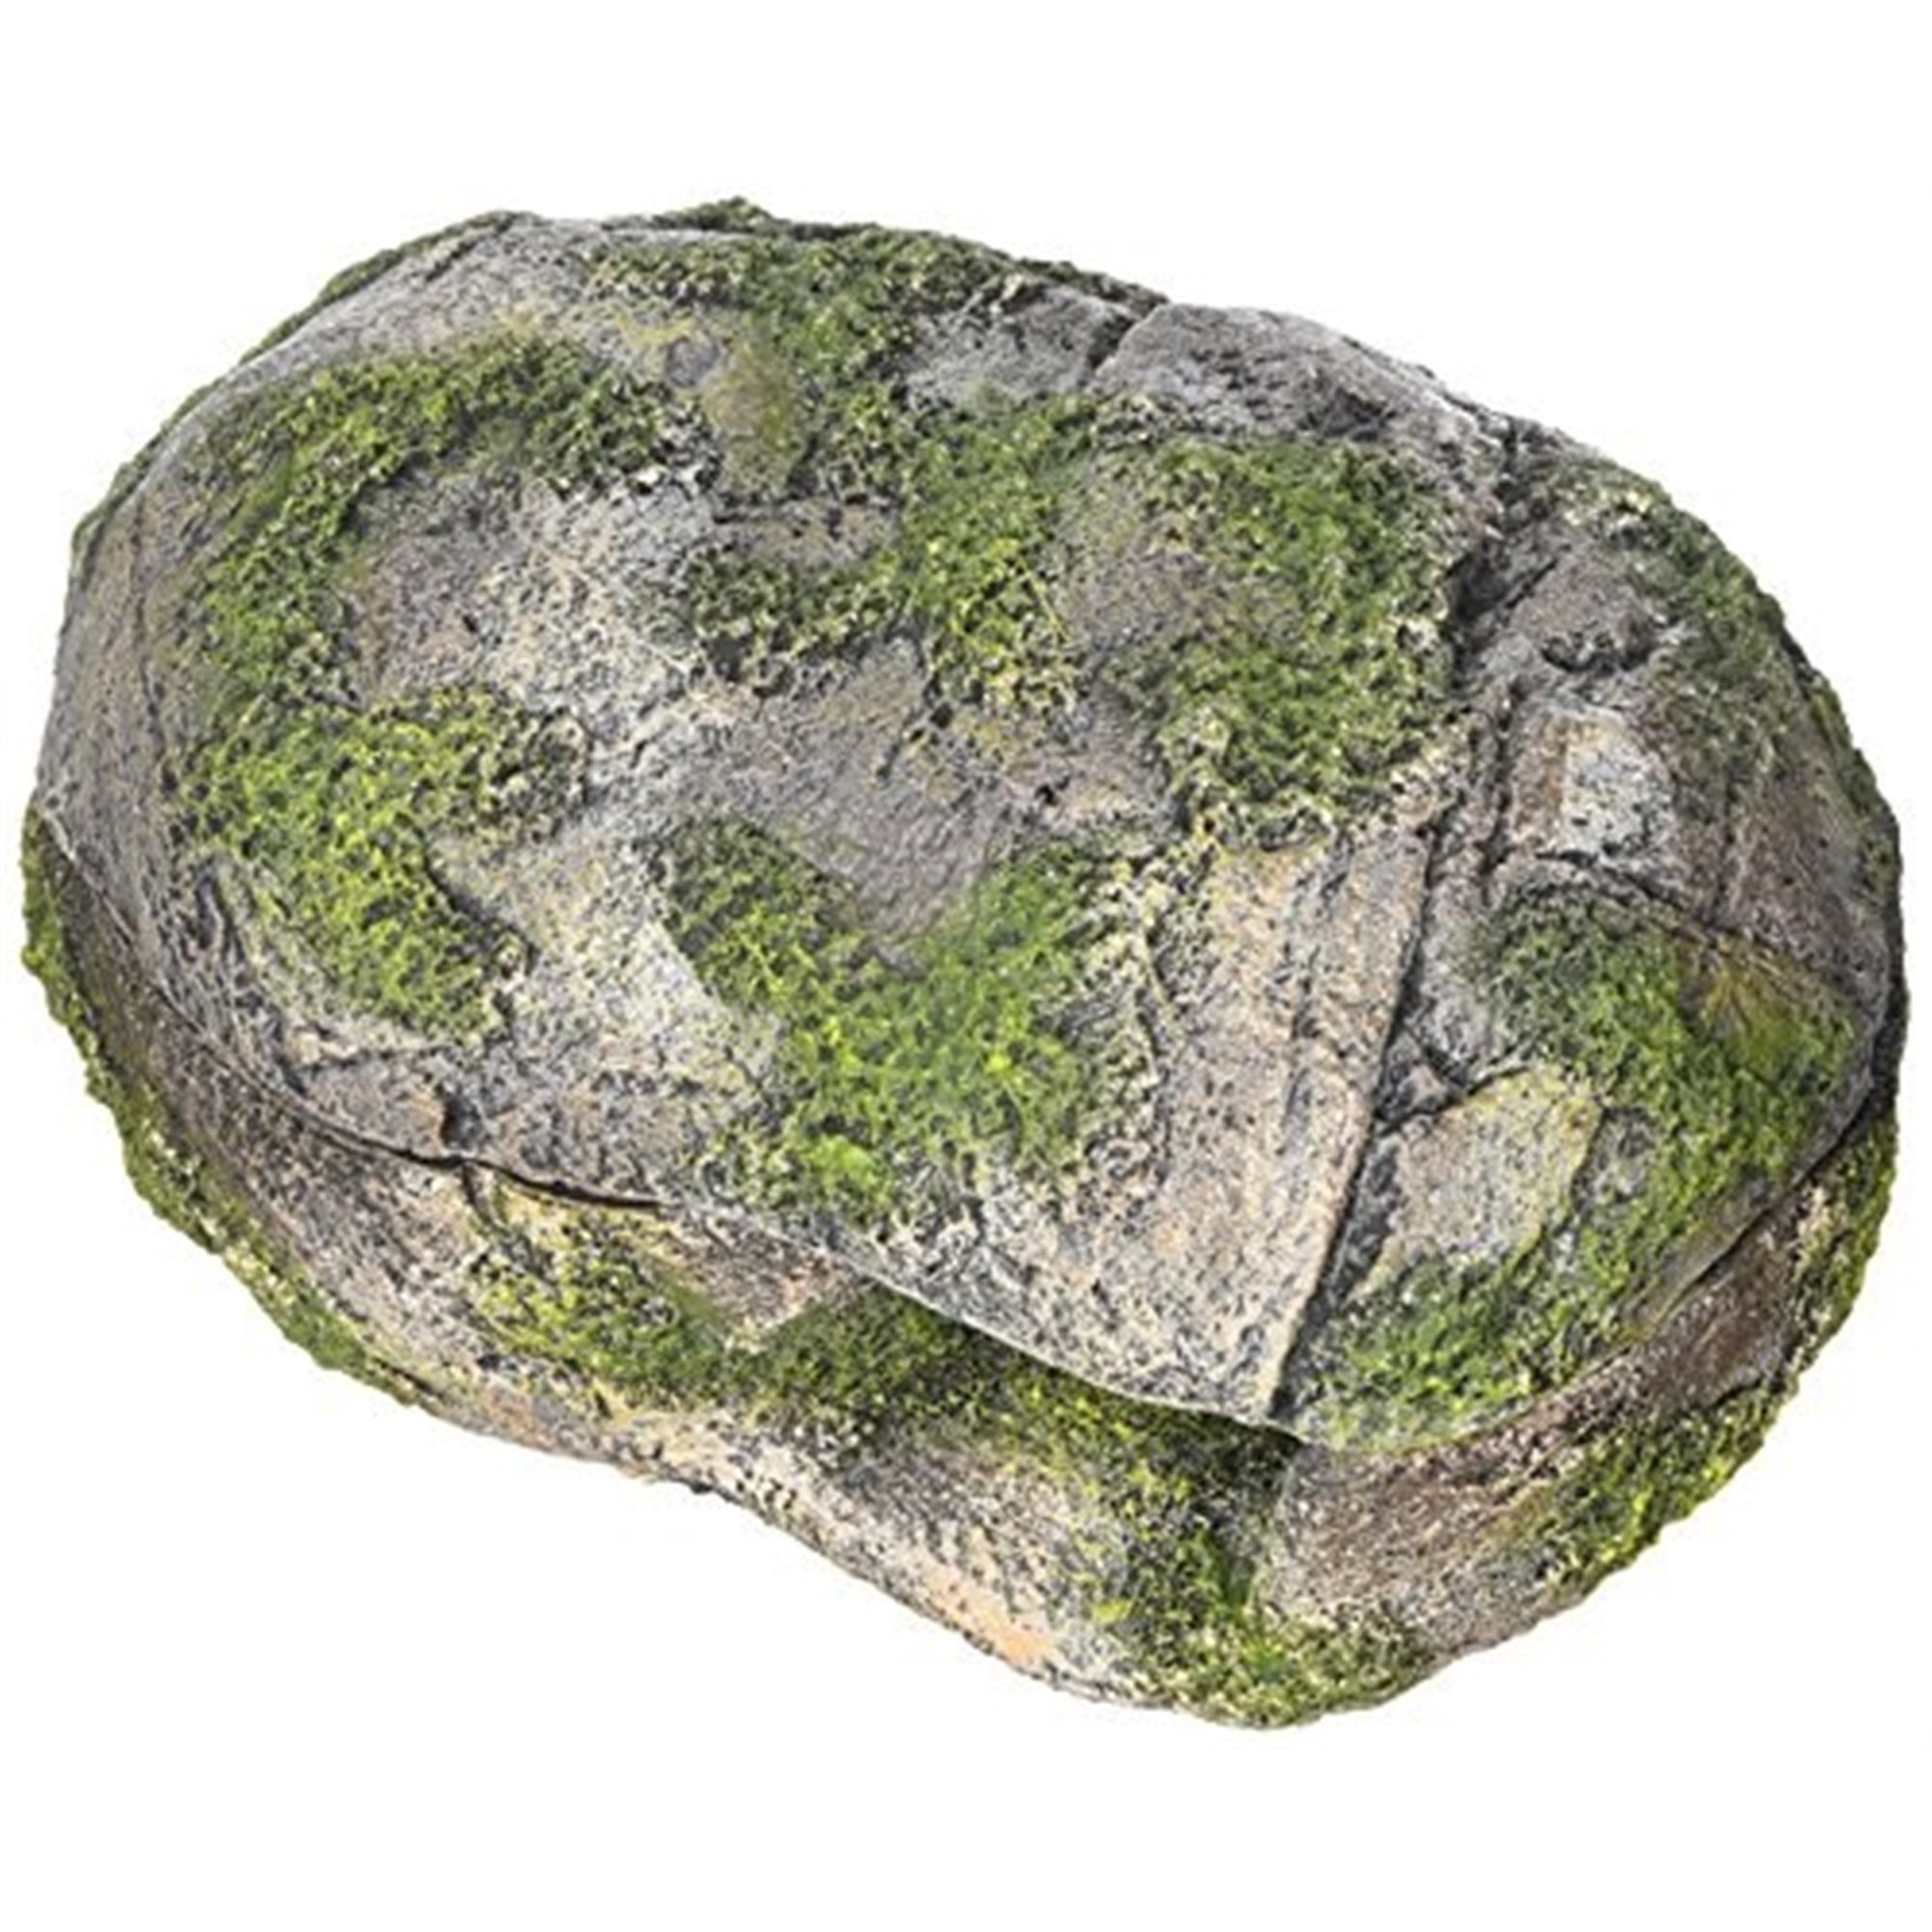 Zilla Naturalistic Hideaway Rock Lair, Size Large 11" x 8" x 6"